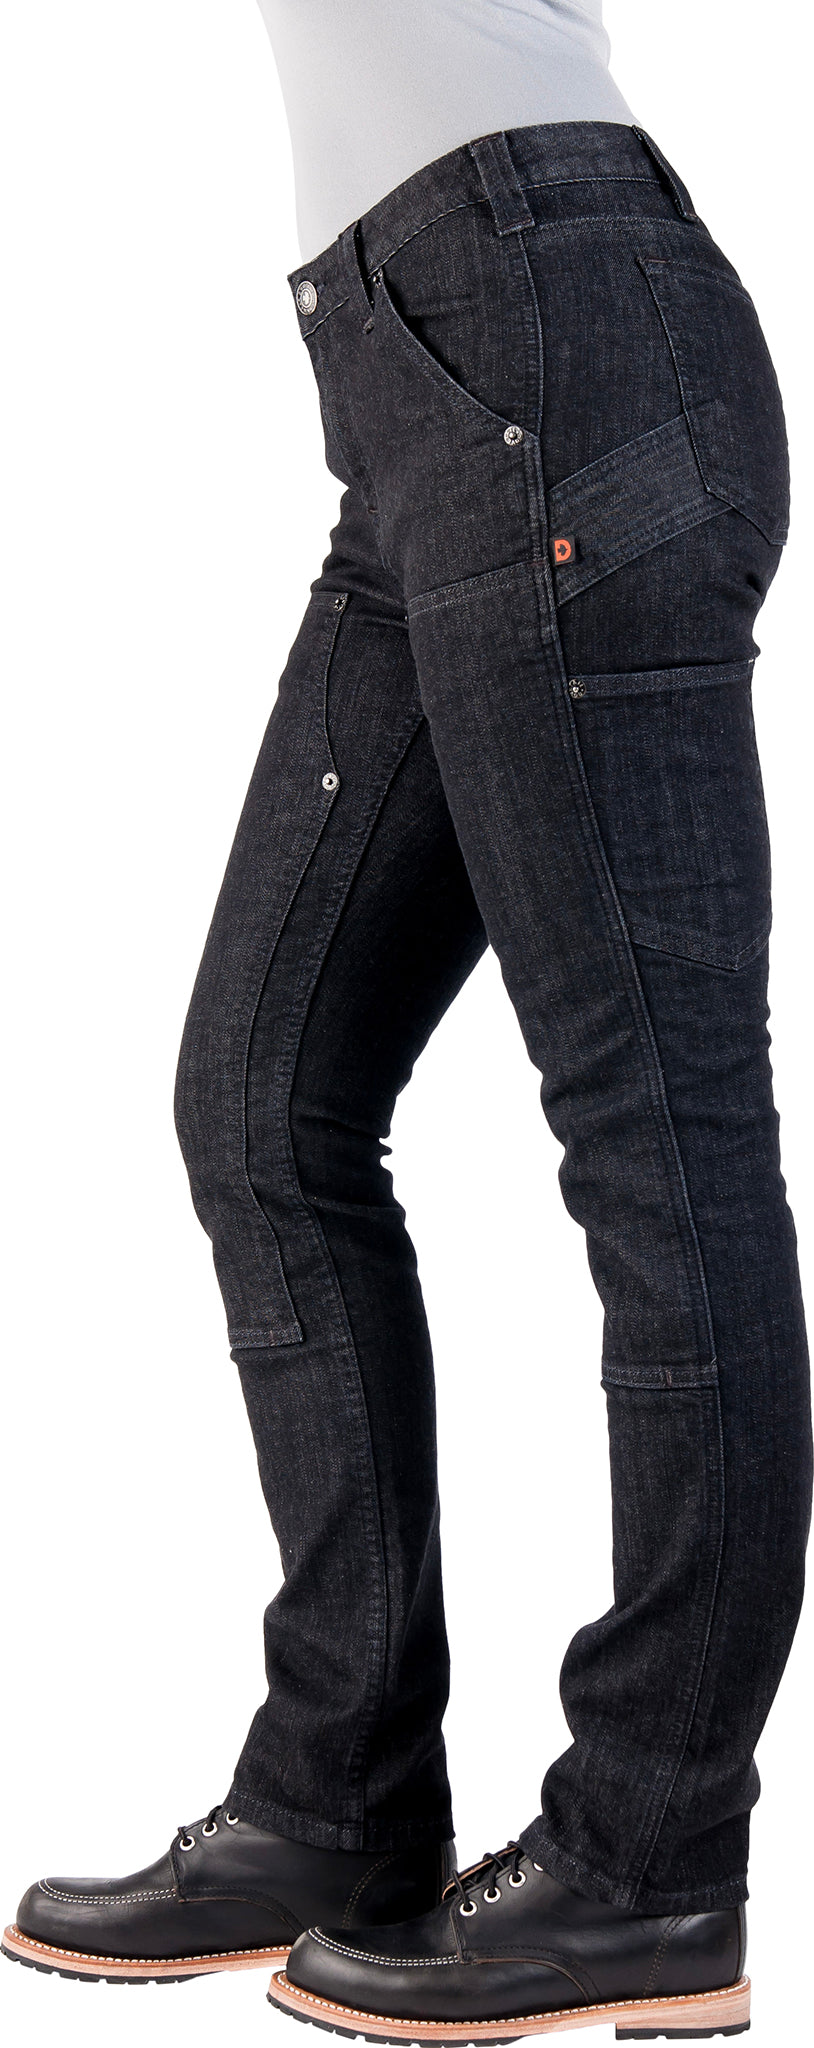 Womens Dovetail Workwear Maven Slim Pants. Size 10/28 (Short